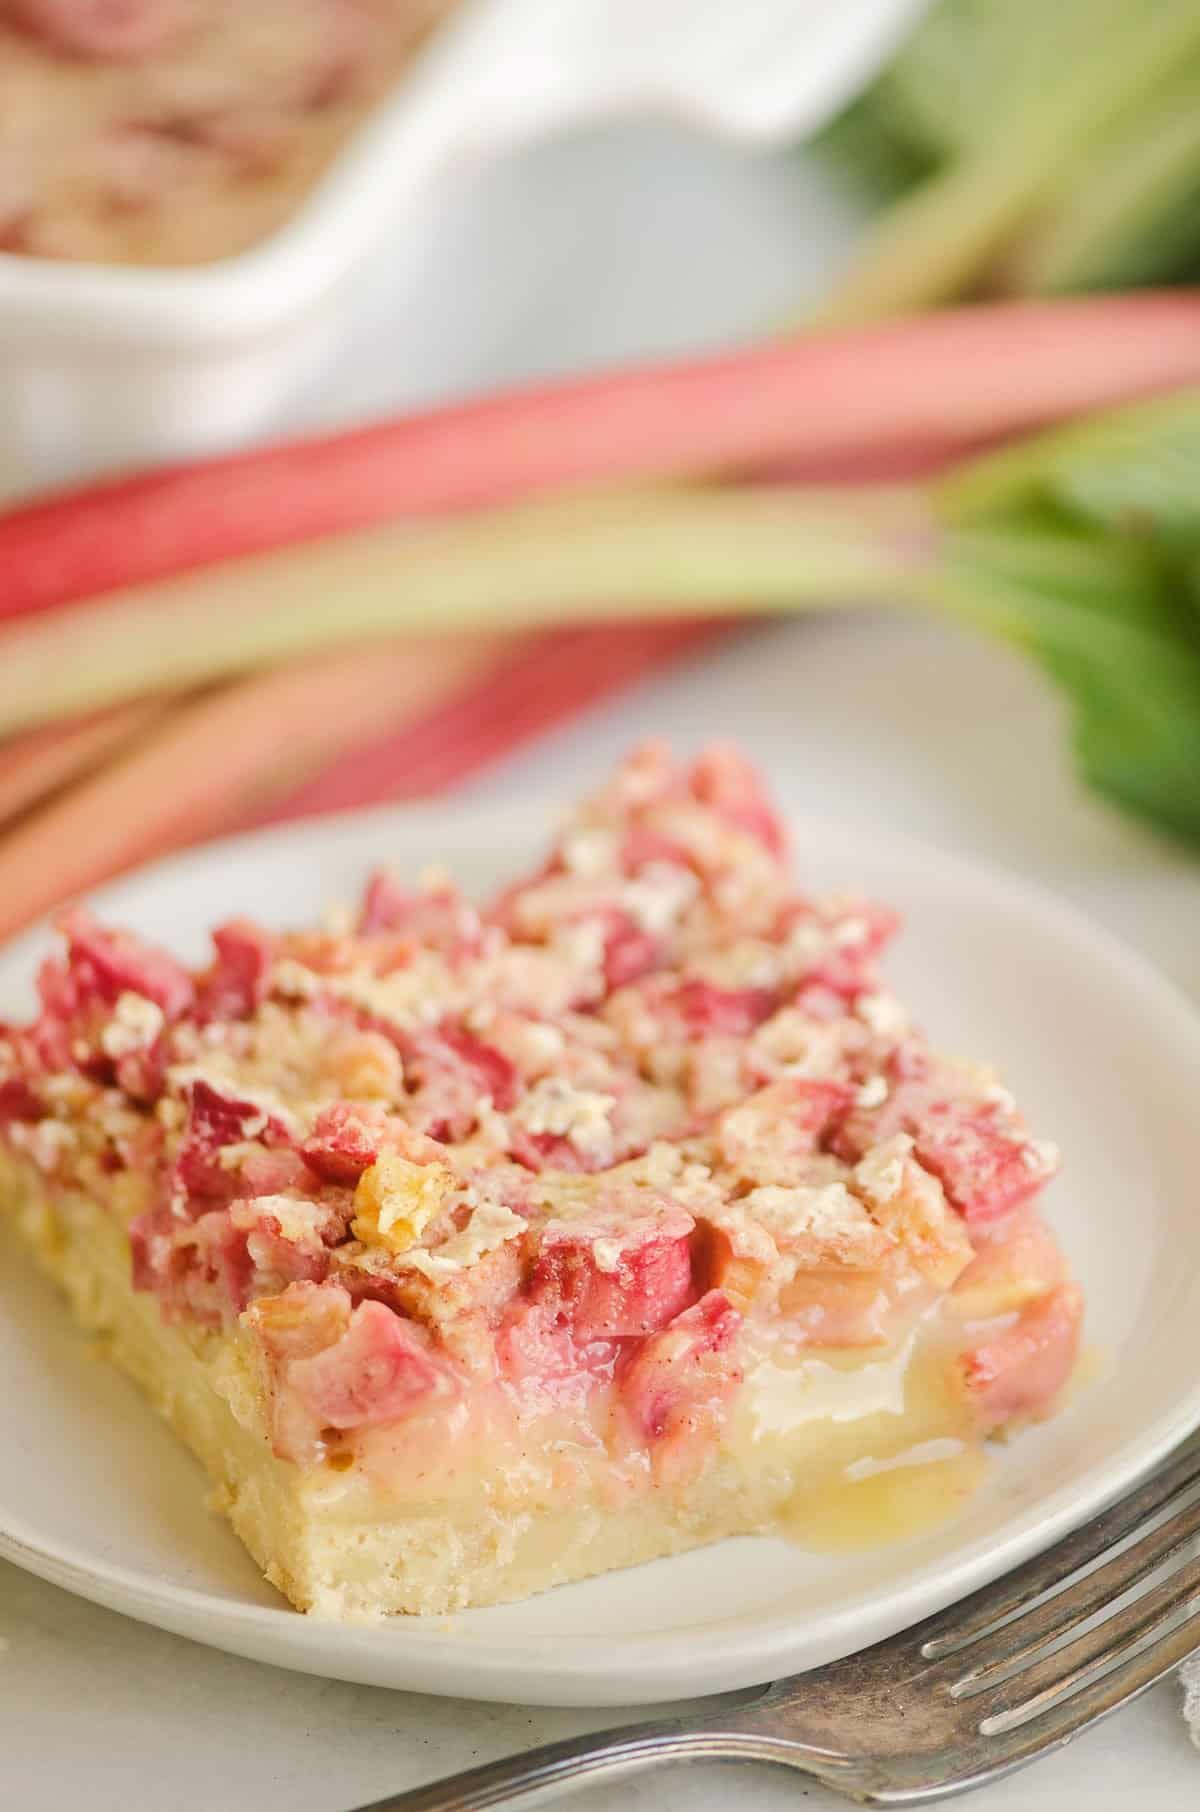 plated rhubarb dream bar on table with rhubarb stalks